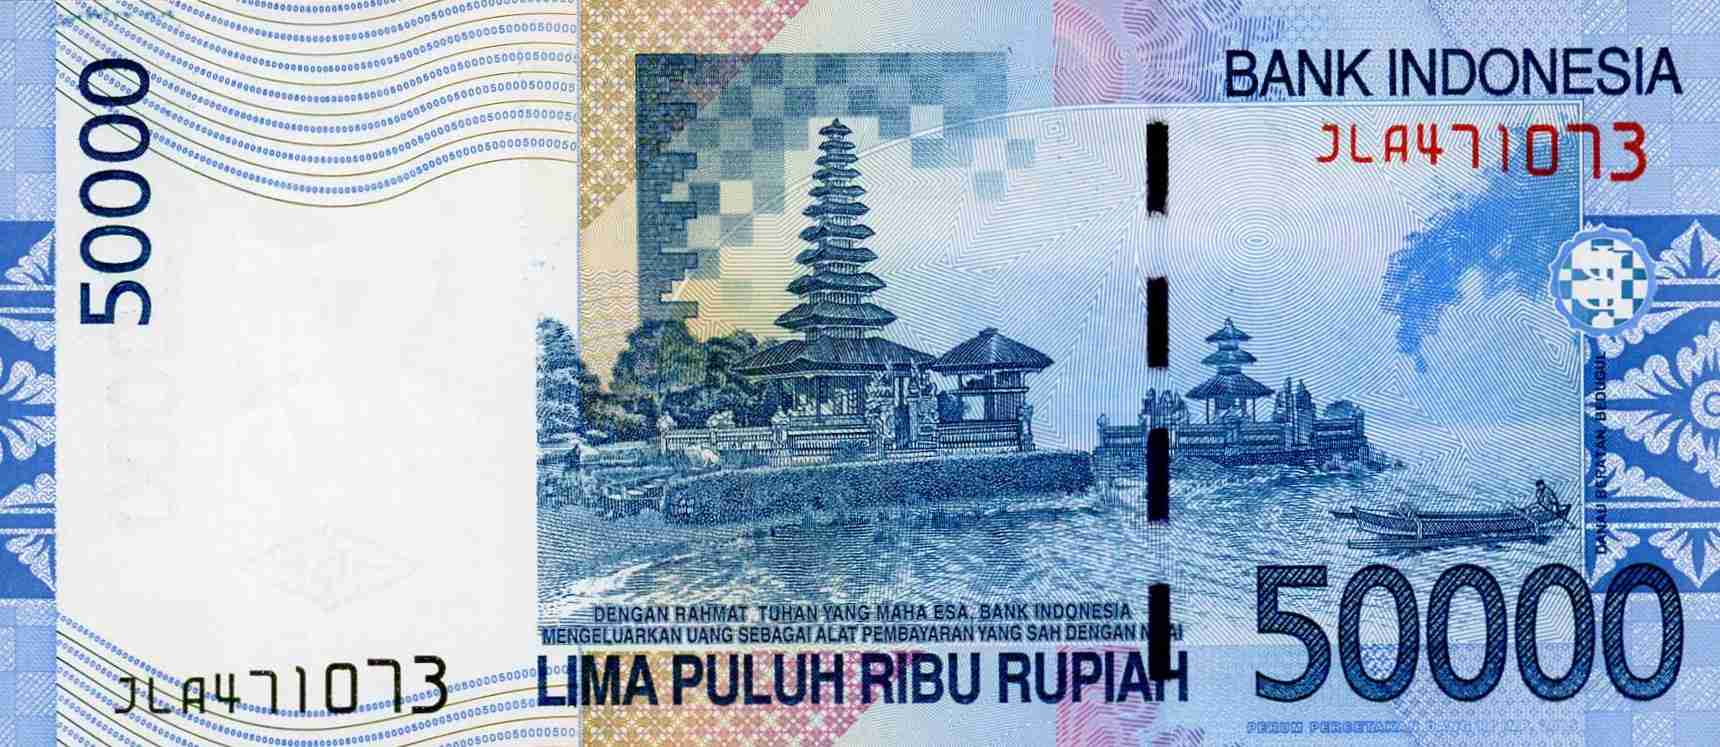 Indonesia 50000 rupiah 2009 back (2).jpg